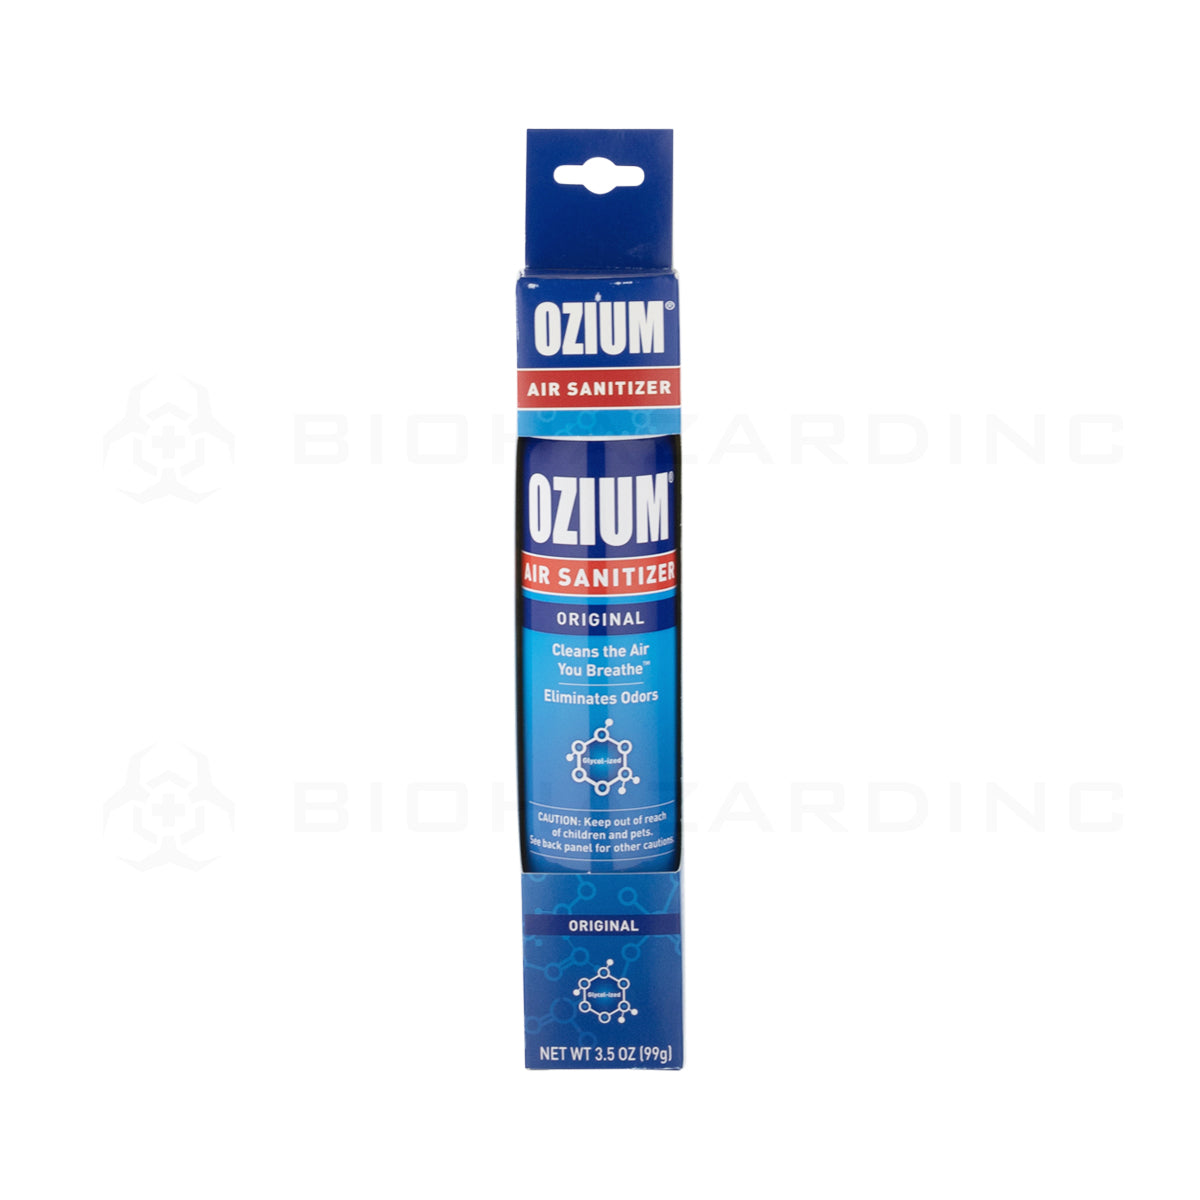 OZIUM® | Original Scent Air Sanitizer - Various Sizes Air Freshener Biohazard Inc   